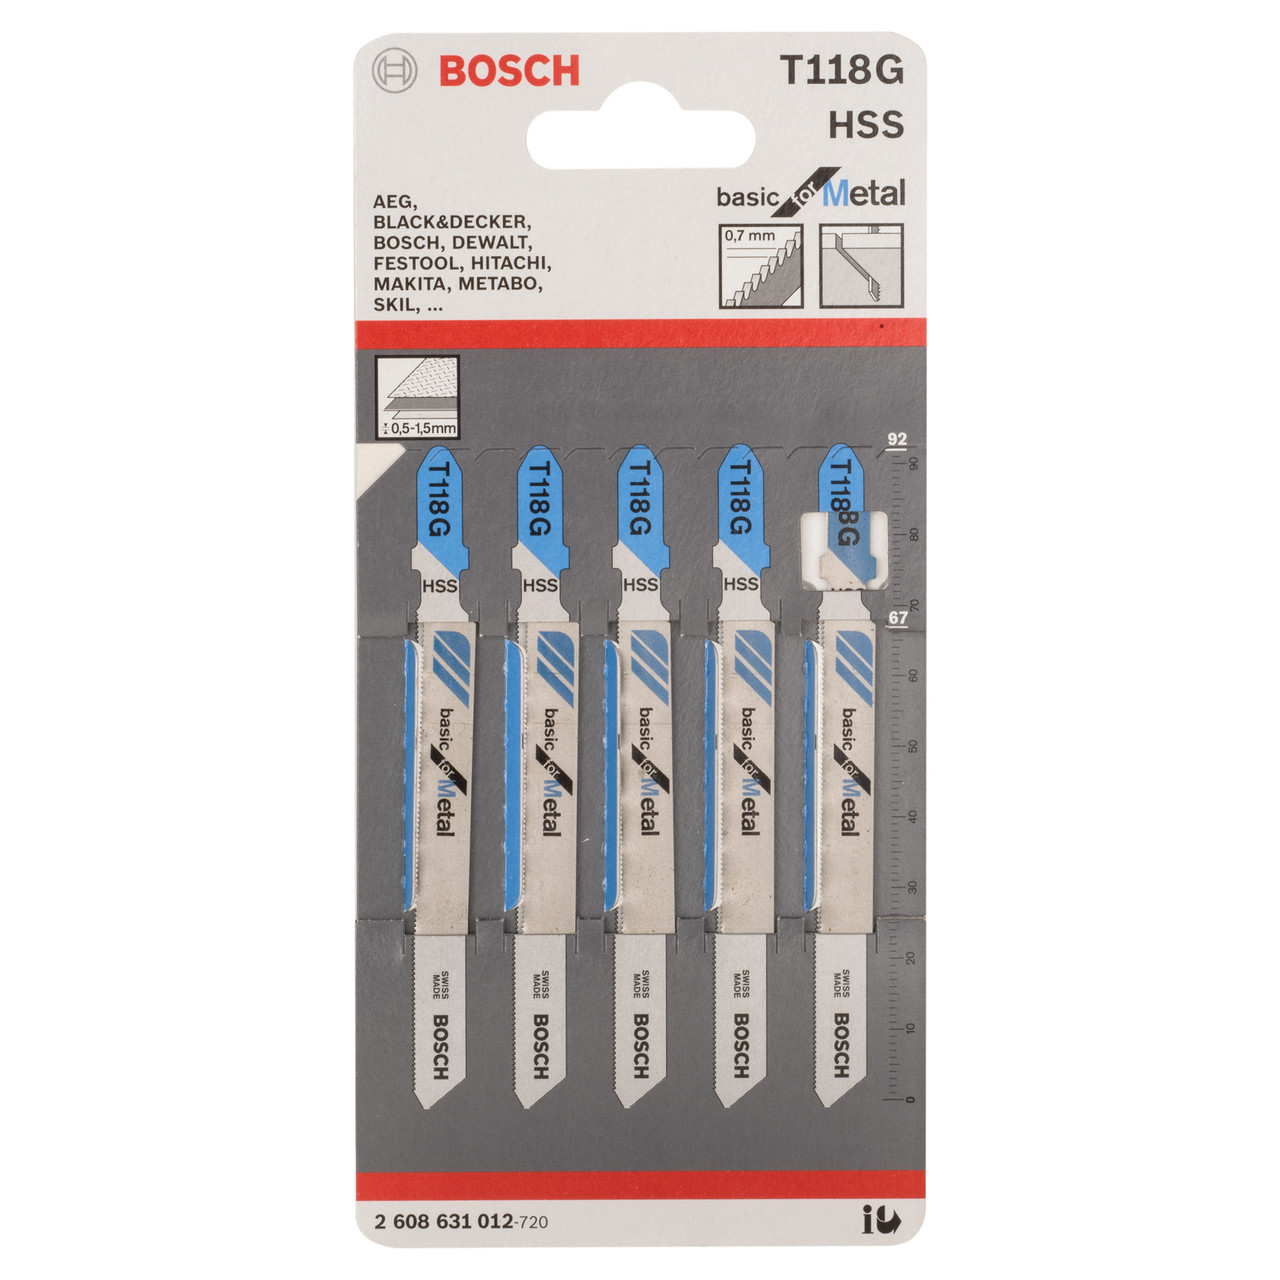 Photos - Power Tool Accessory Bosch T118G  Jigsaw Blades - Basic for Metal (5 Piece) 2608631 (2608631012)